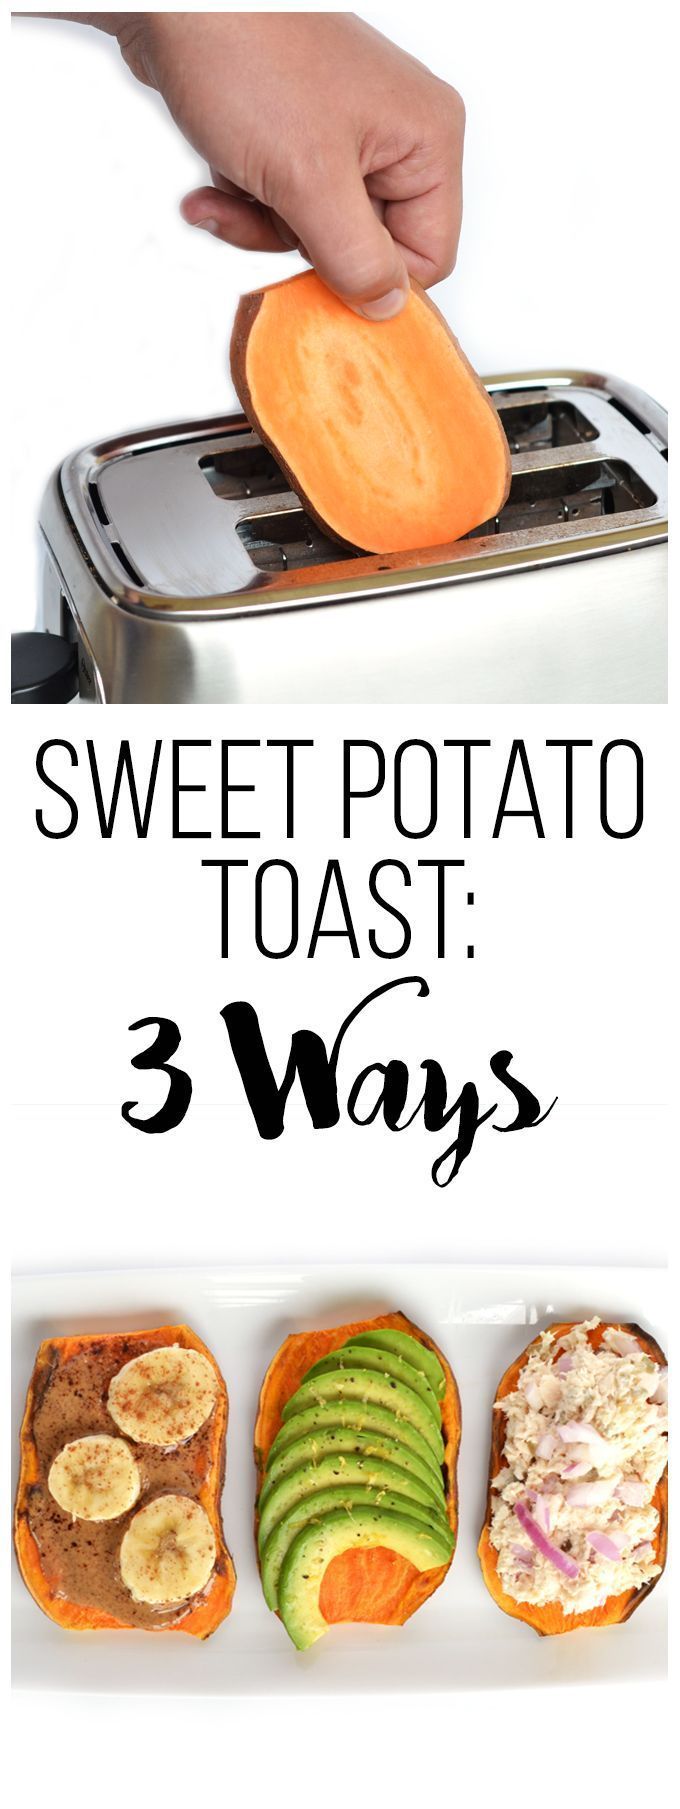 Sweet Potato Toast: 3 Ways! A great paleo, gluten free  Whole30 alternative to wheat toast! Top with Almond Butter  Bananas,